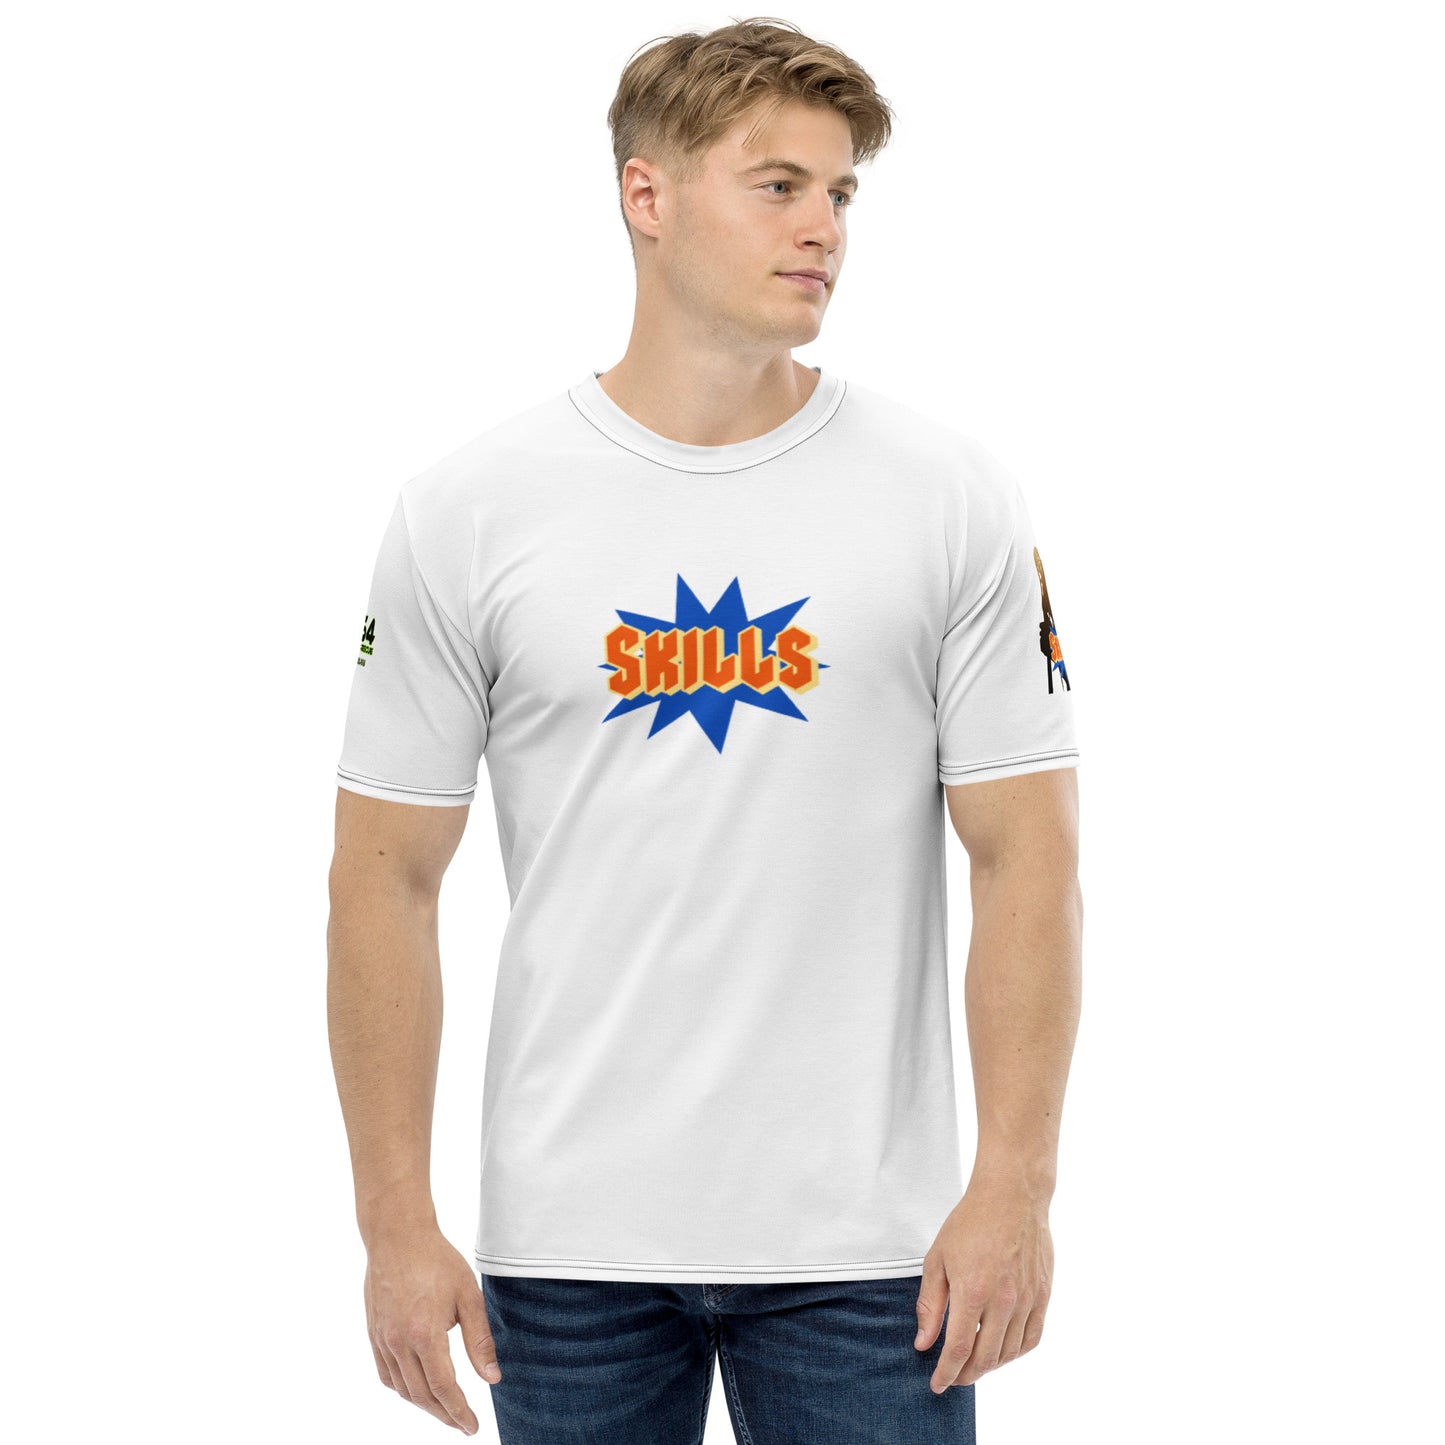 SKILLS Lacrosse 954 Signature Men's t-shirt